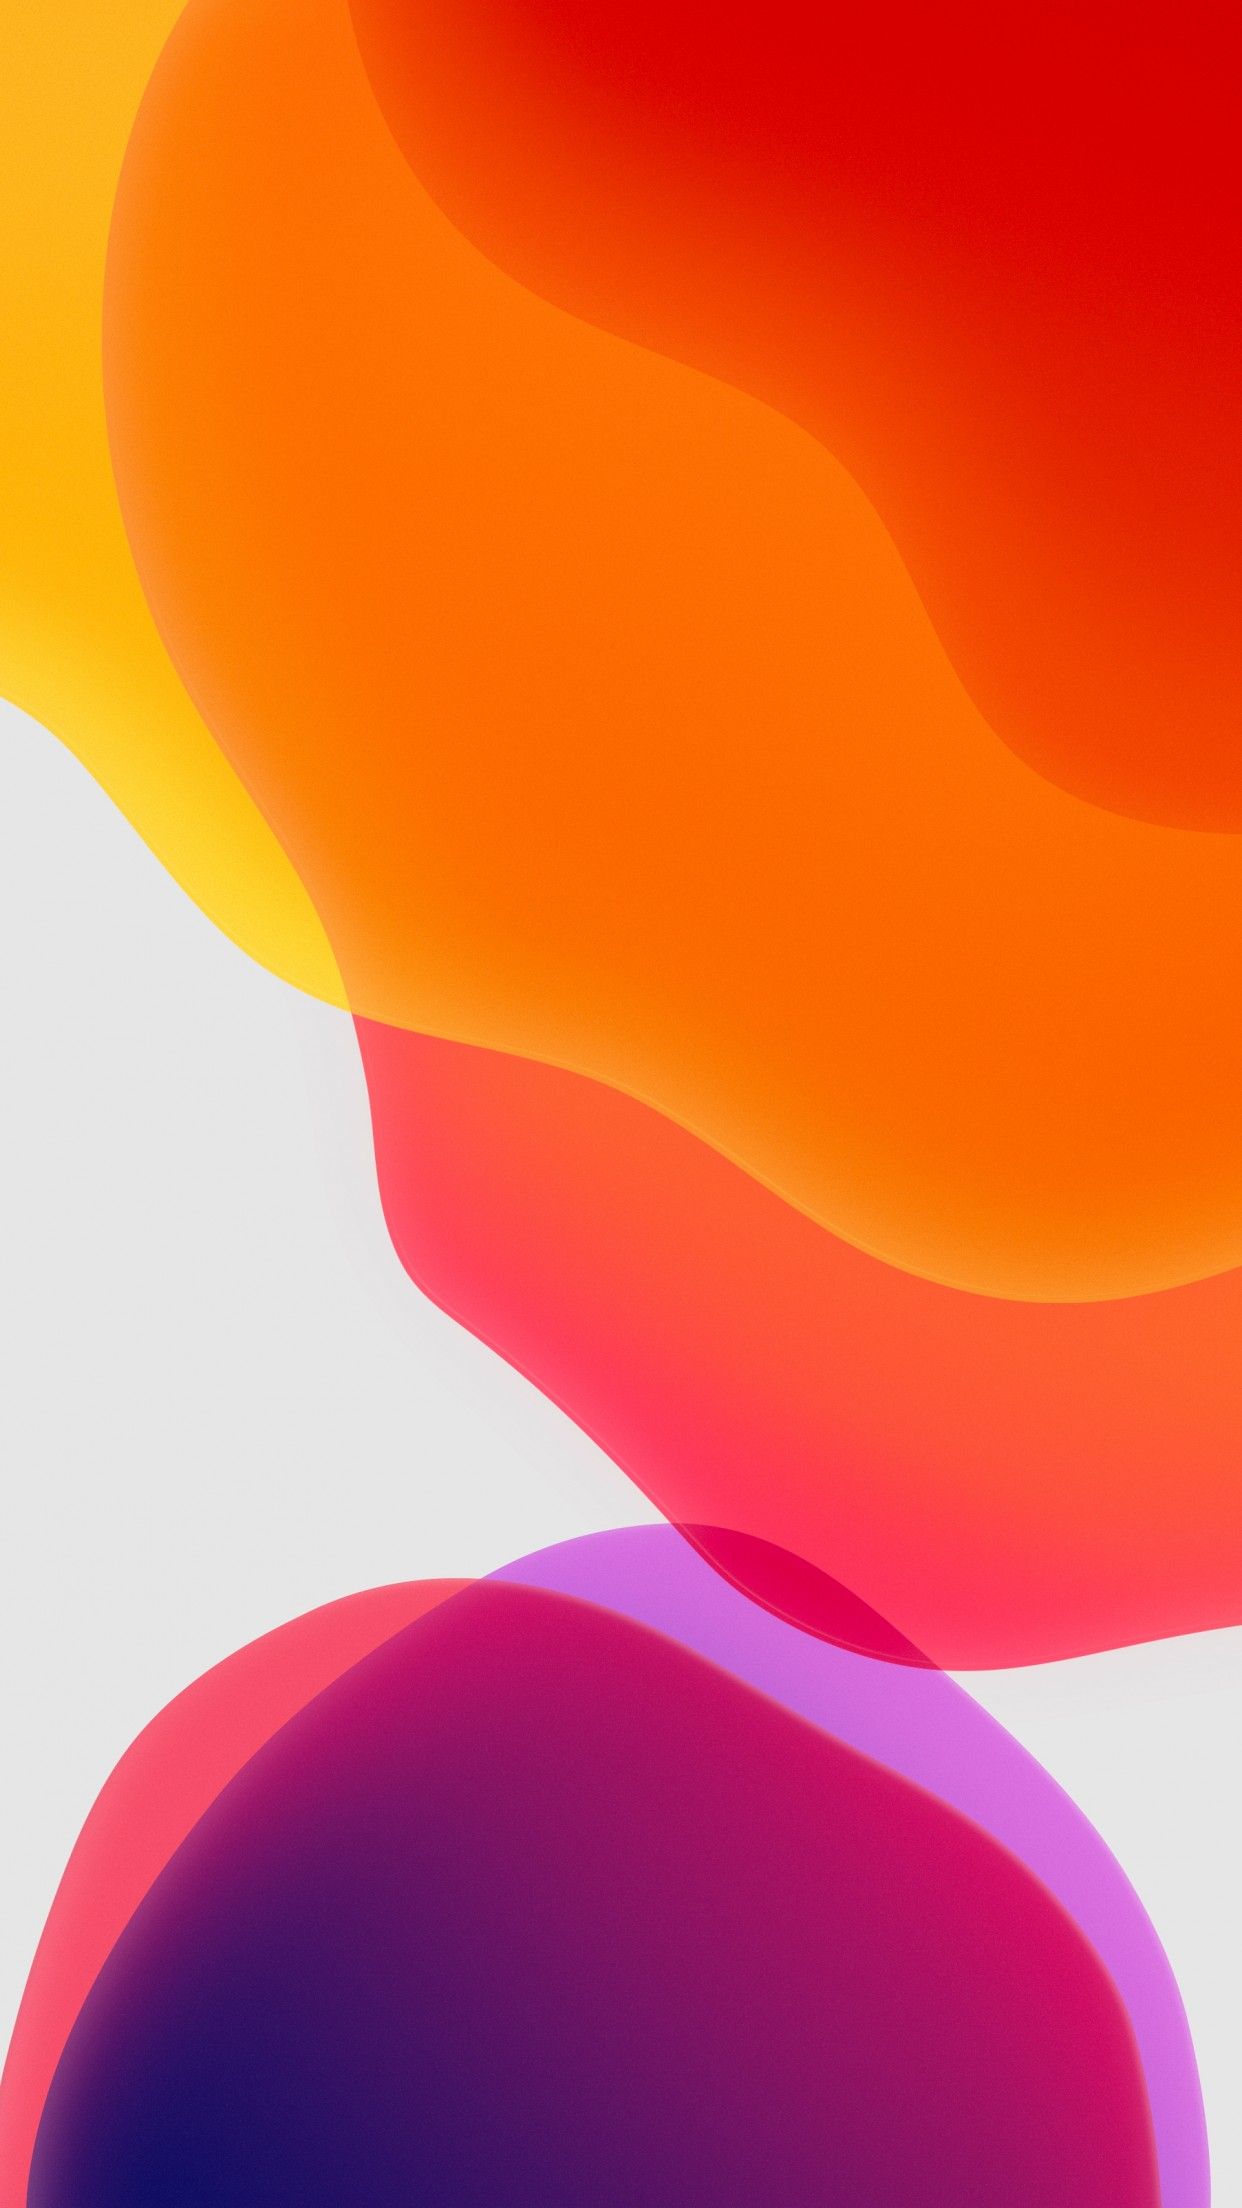 iPadOS 4K Wallpaper, Stock, Orange, White background, iPad, iOS HD, Abstract